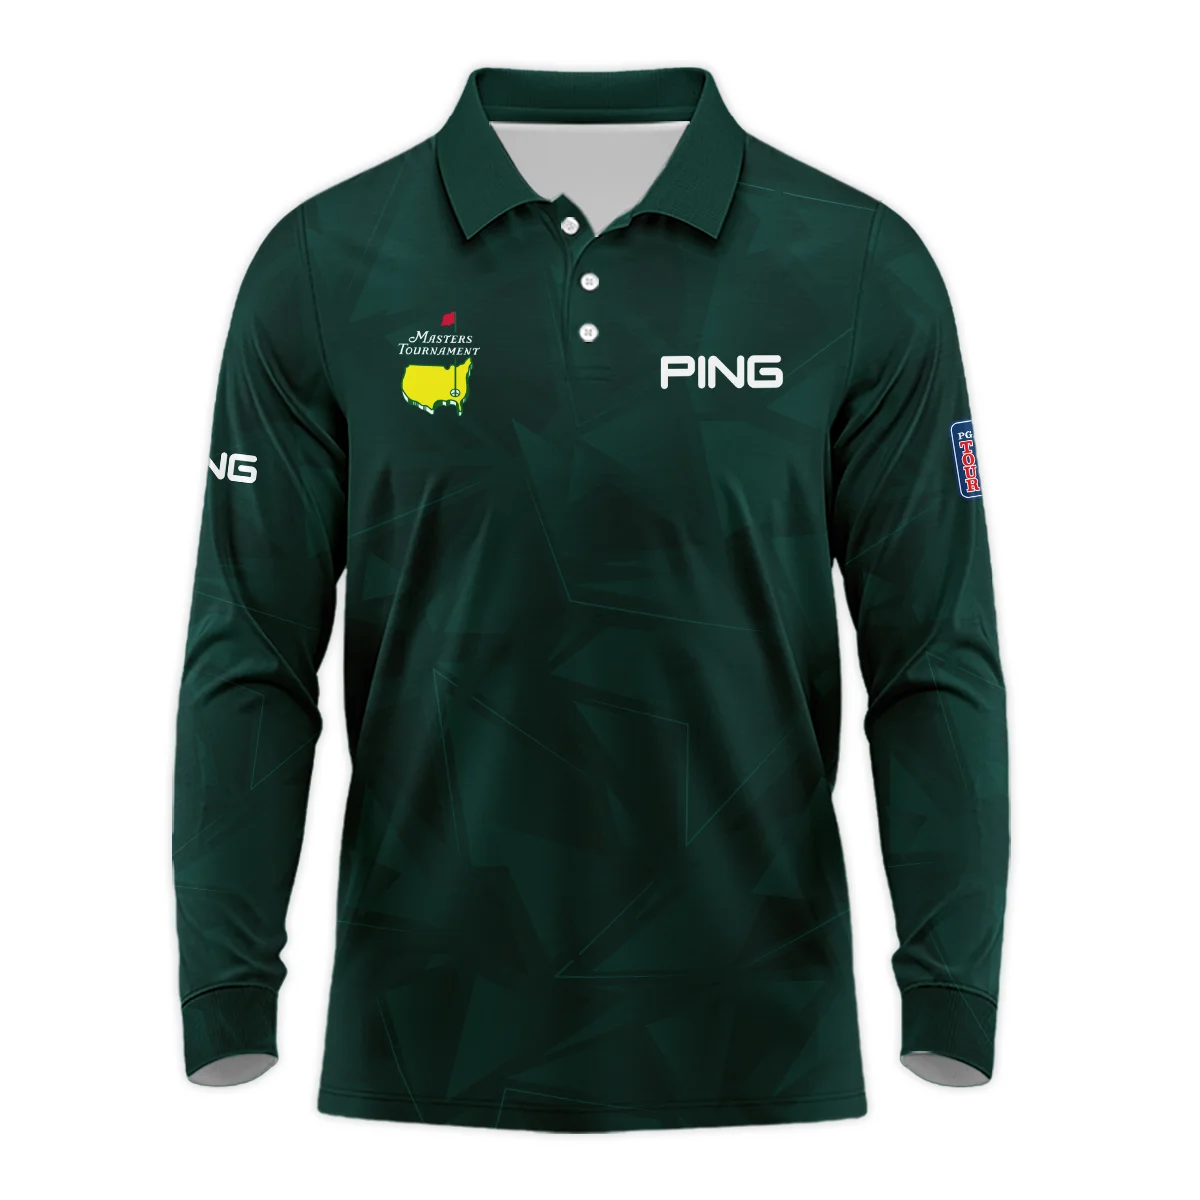 Dark Green Abstract Sport Masters Tournament Ping Unisex Sweatshirt Style Classic Sweatshirt